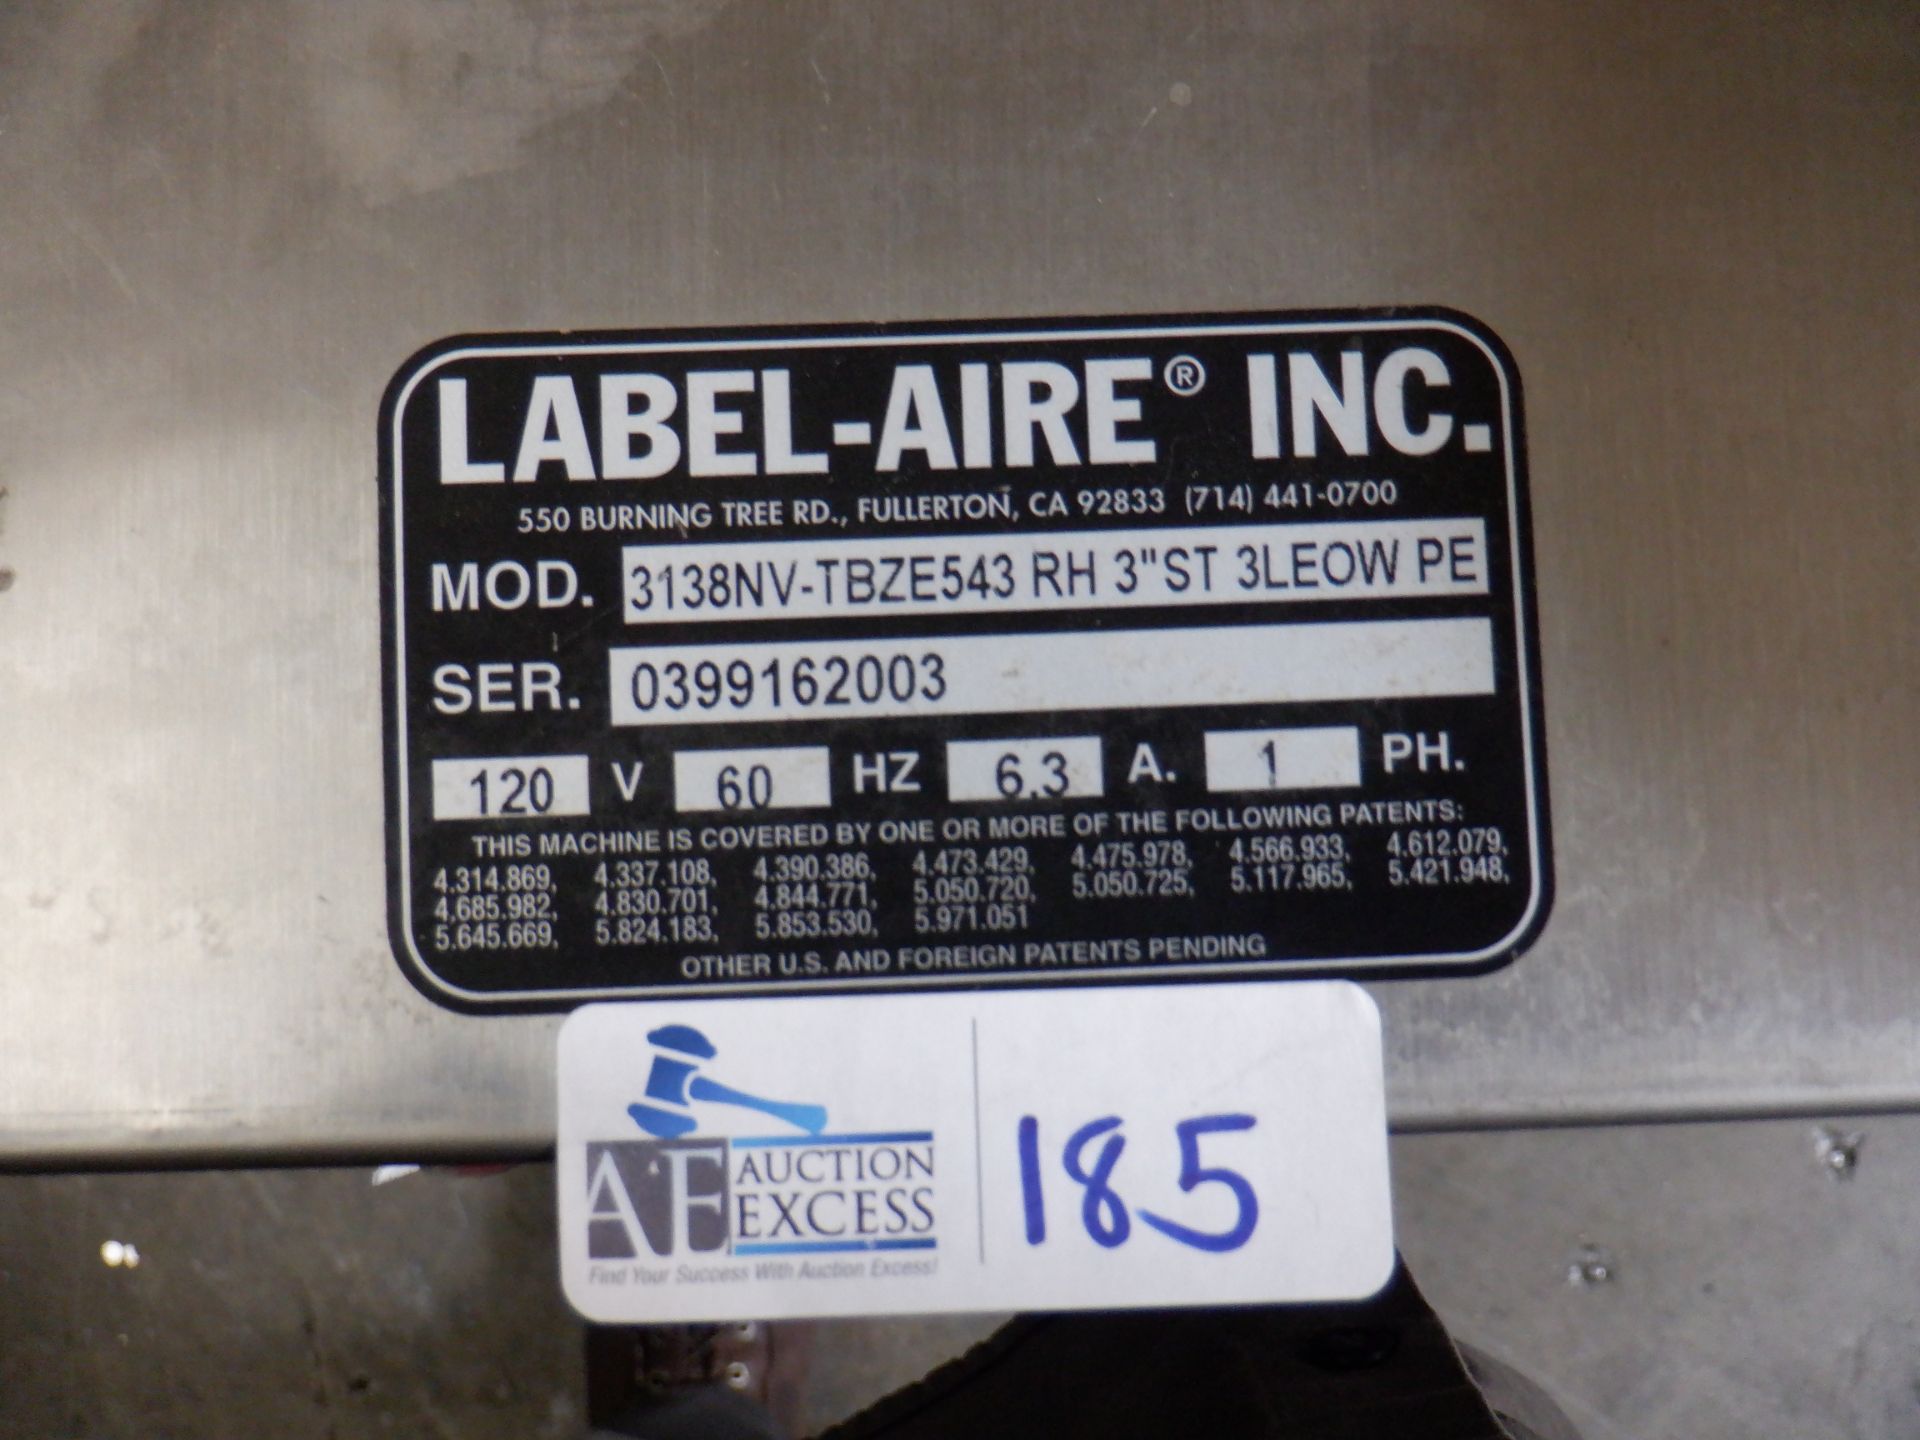 LABEL-AIRE MODEL 3138NV-TBZE543 RH 3"ST 3LEOW PE PARTS AND REPAIR - Image 6 of 10